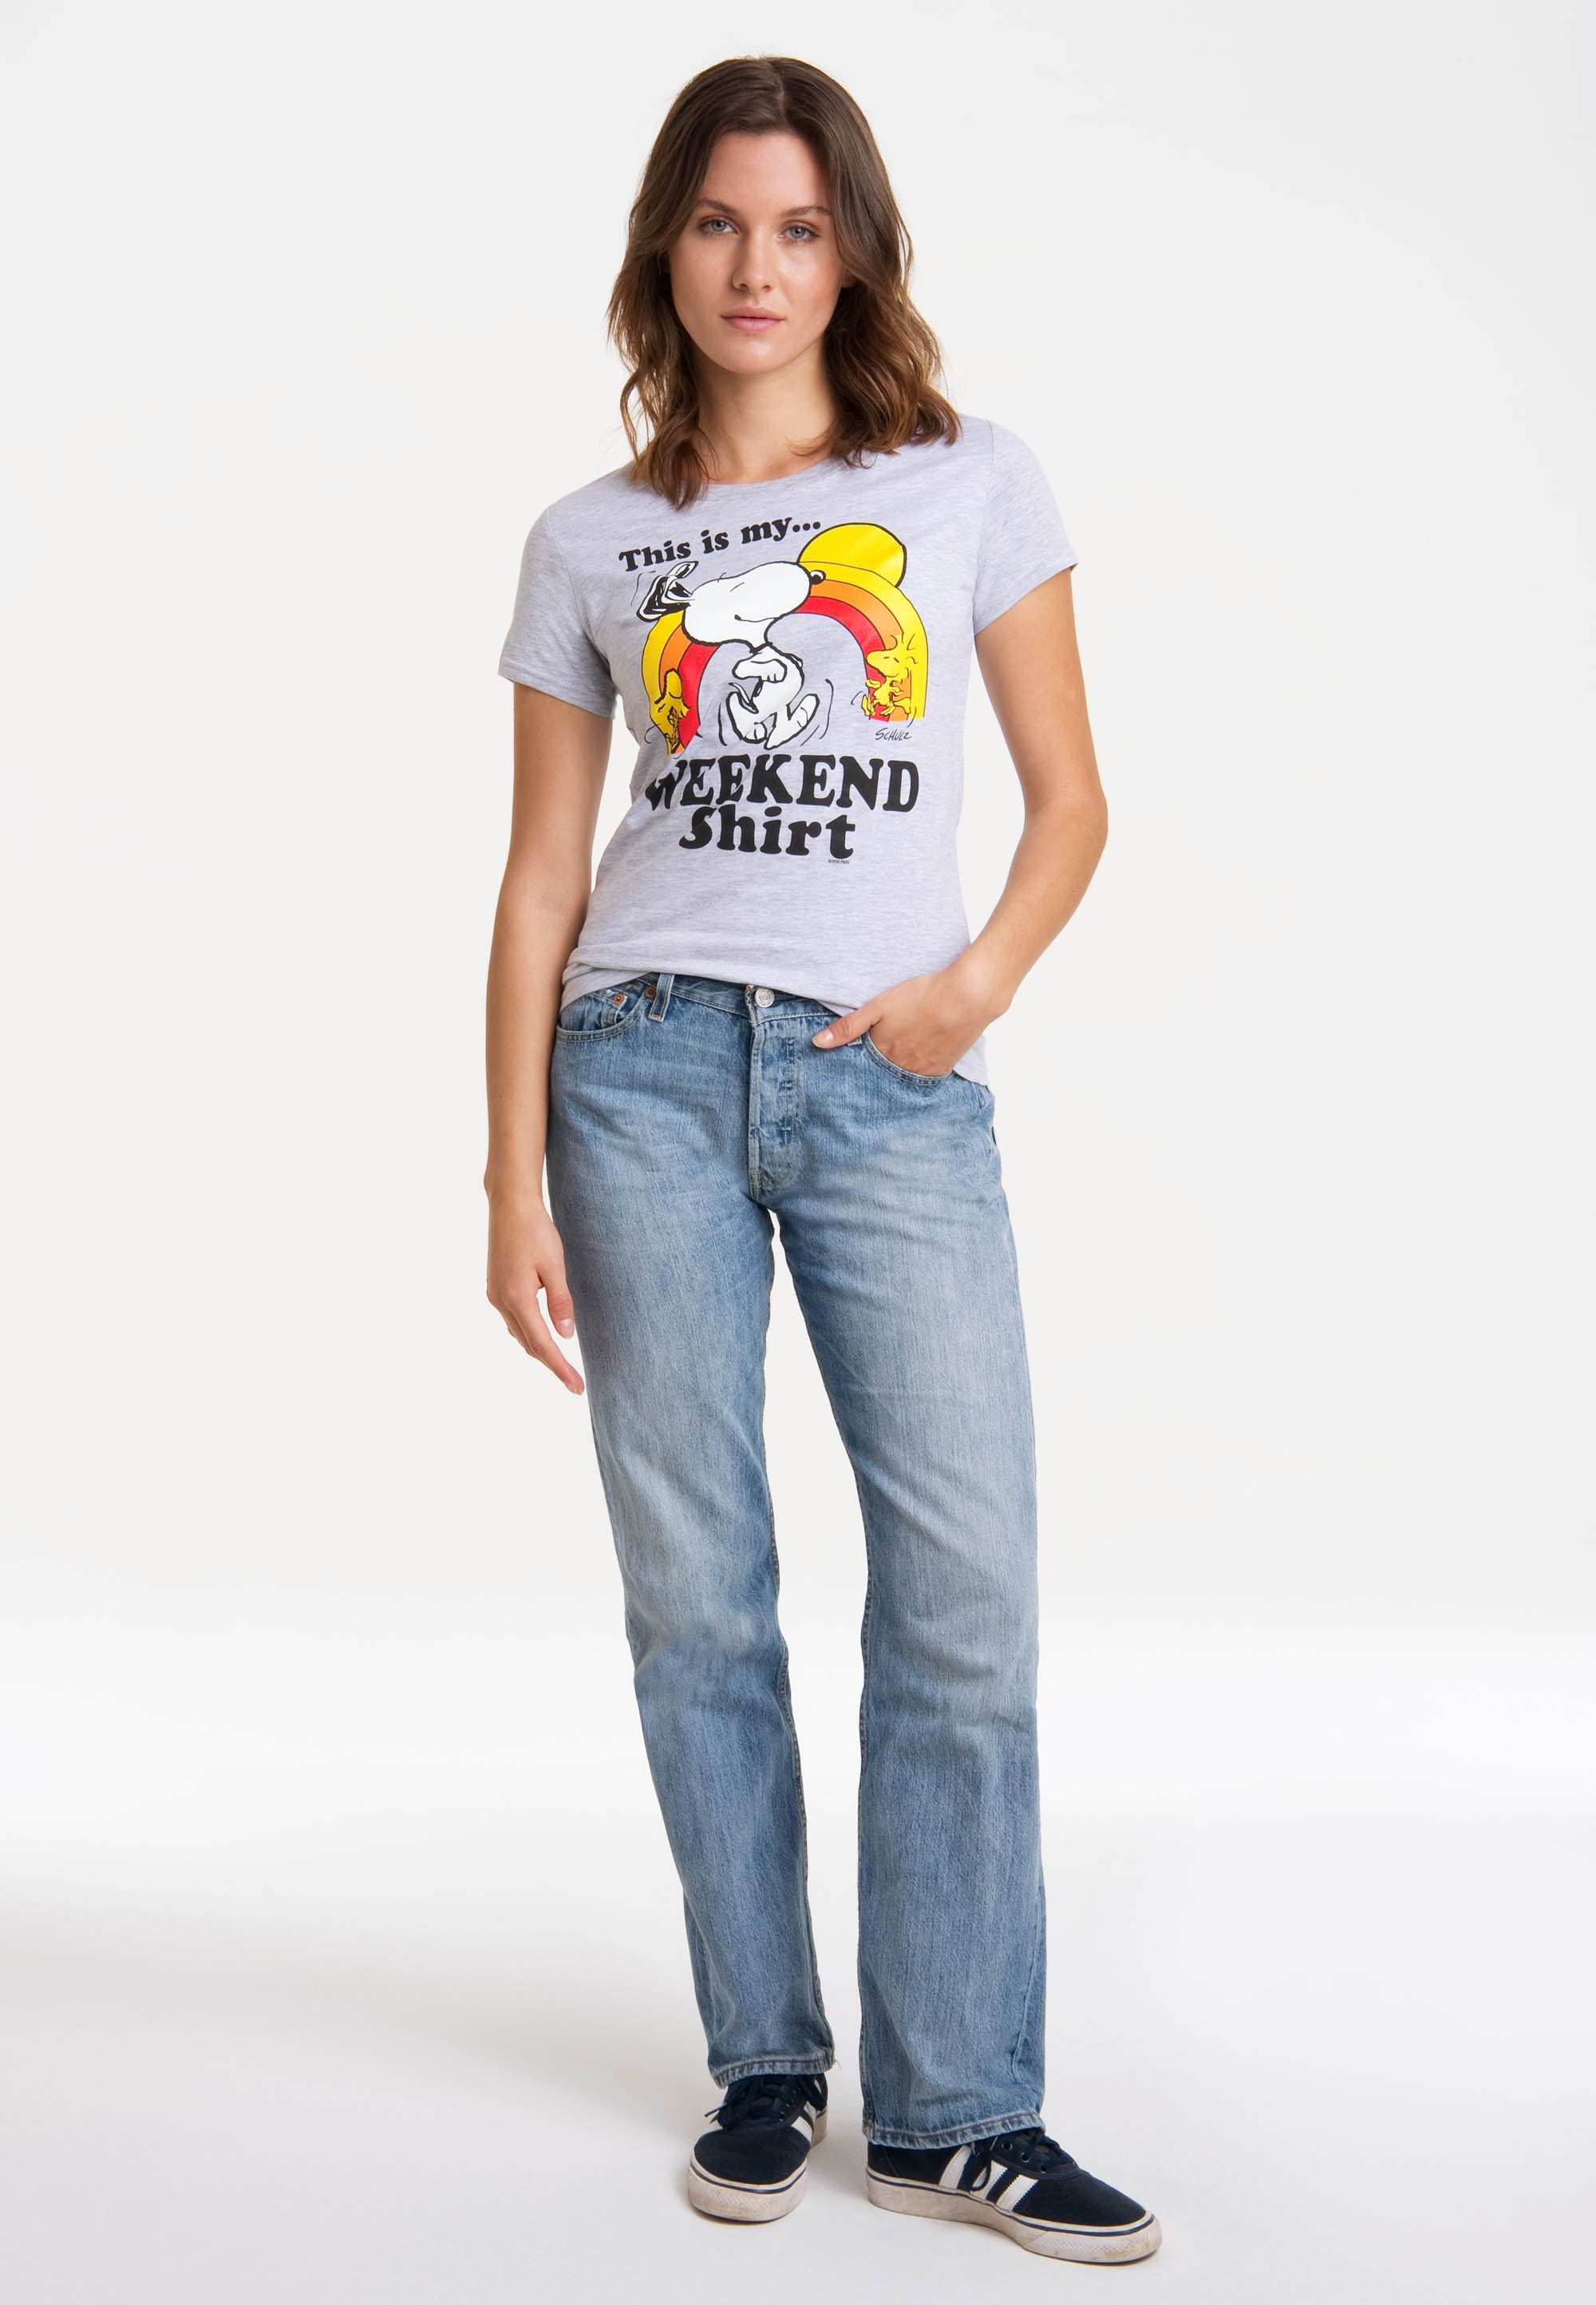 mit Weekend T-Shirt & - Woodstock Peanuts LOGOSHIRT Snoopy lizenziertem Originaldesign -